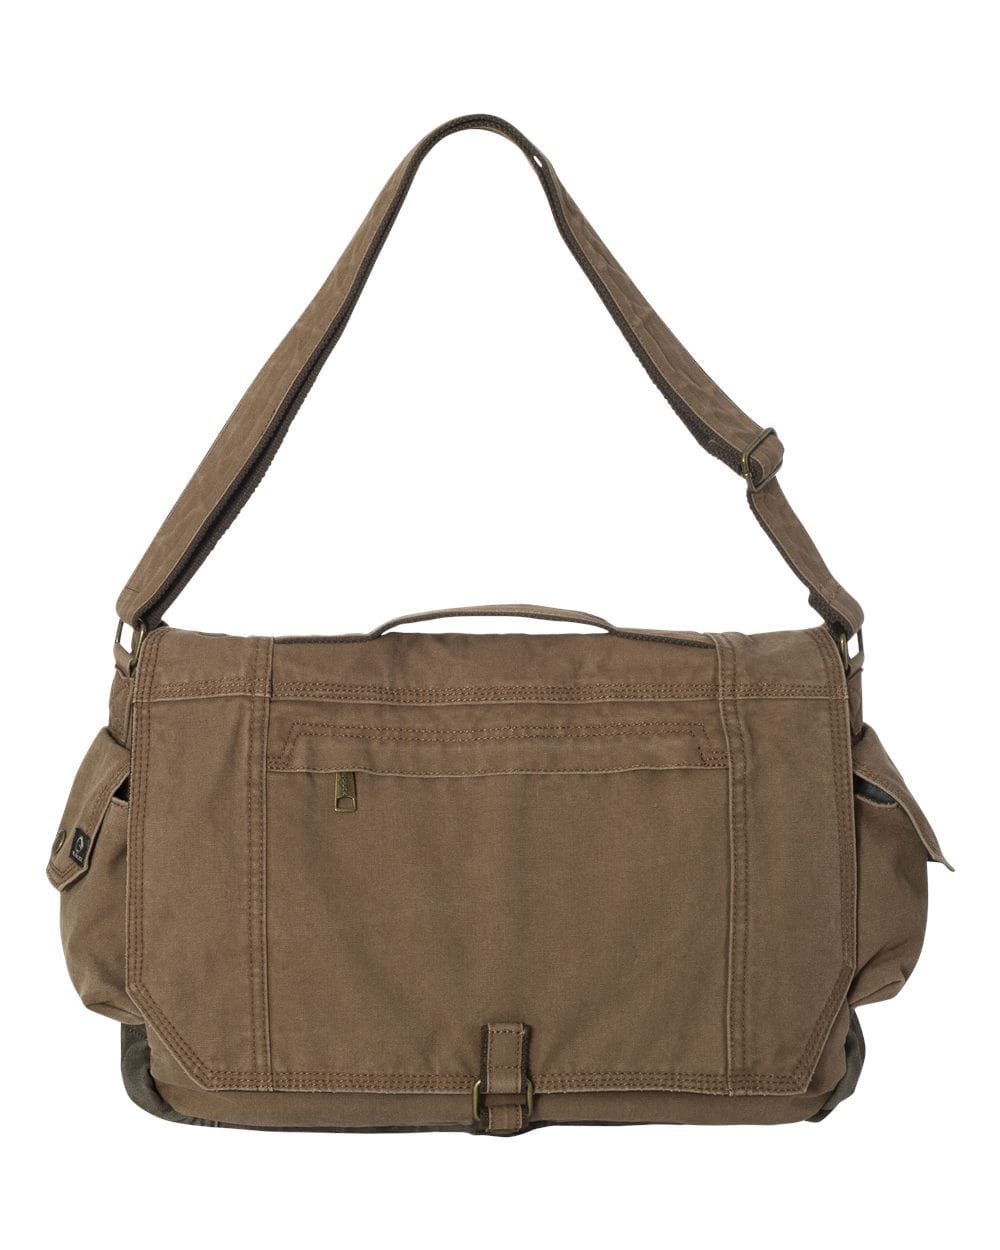 DRI DUCK Bags One Size / Field Khaki/Tobacco DRI DUCK - Messenger Bag